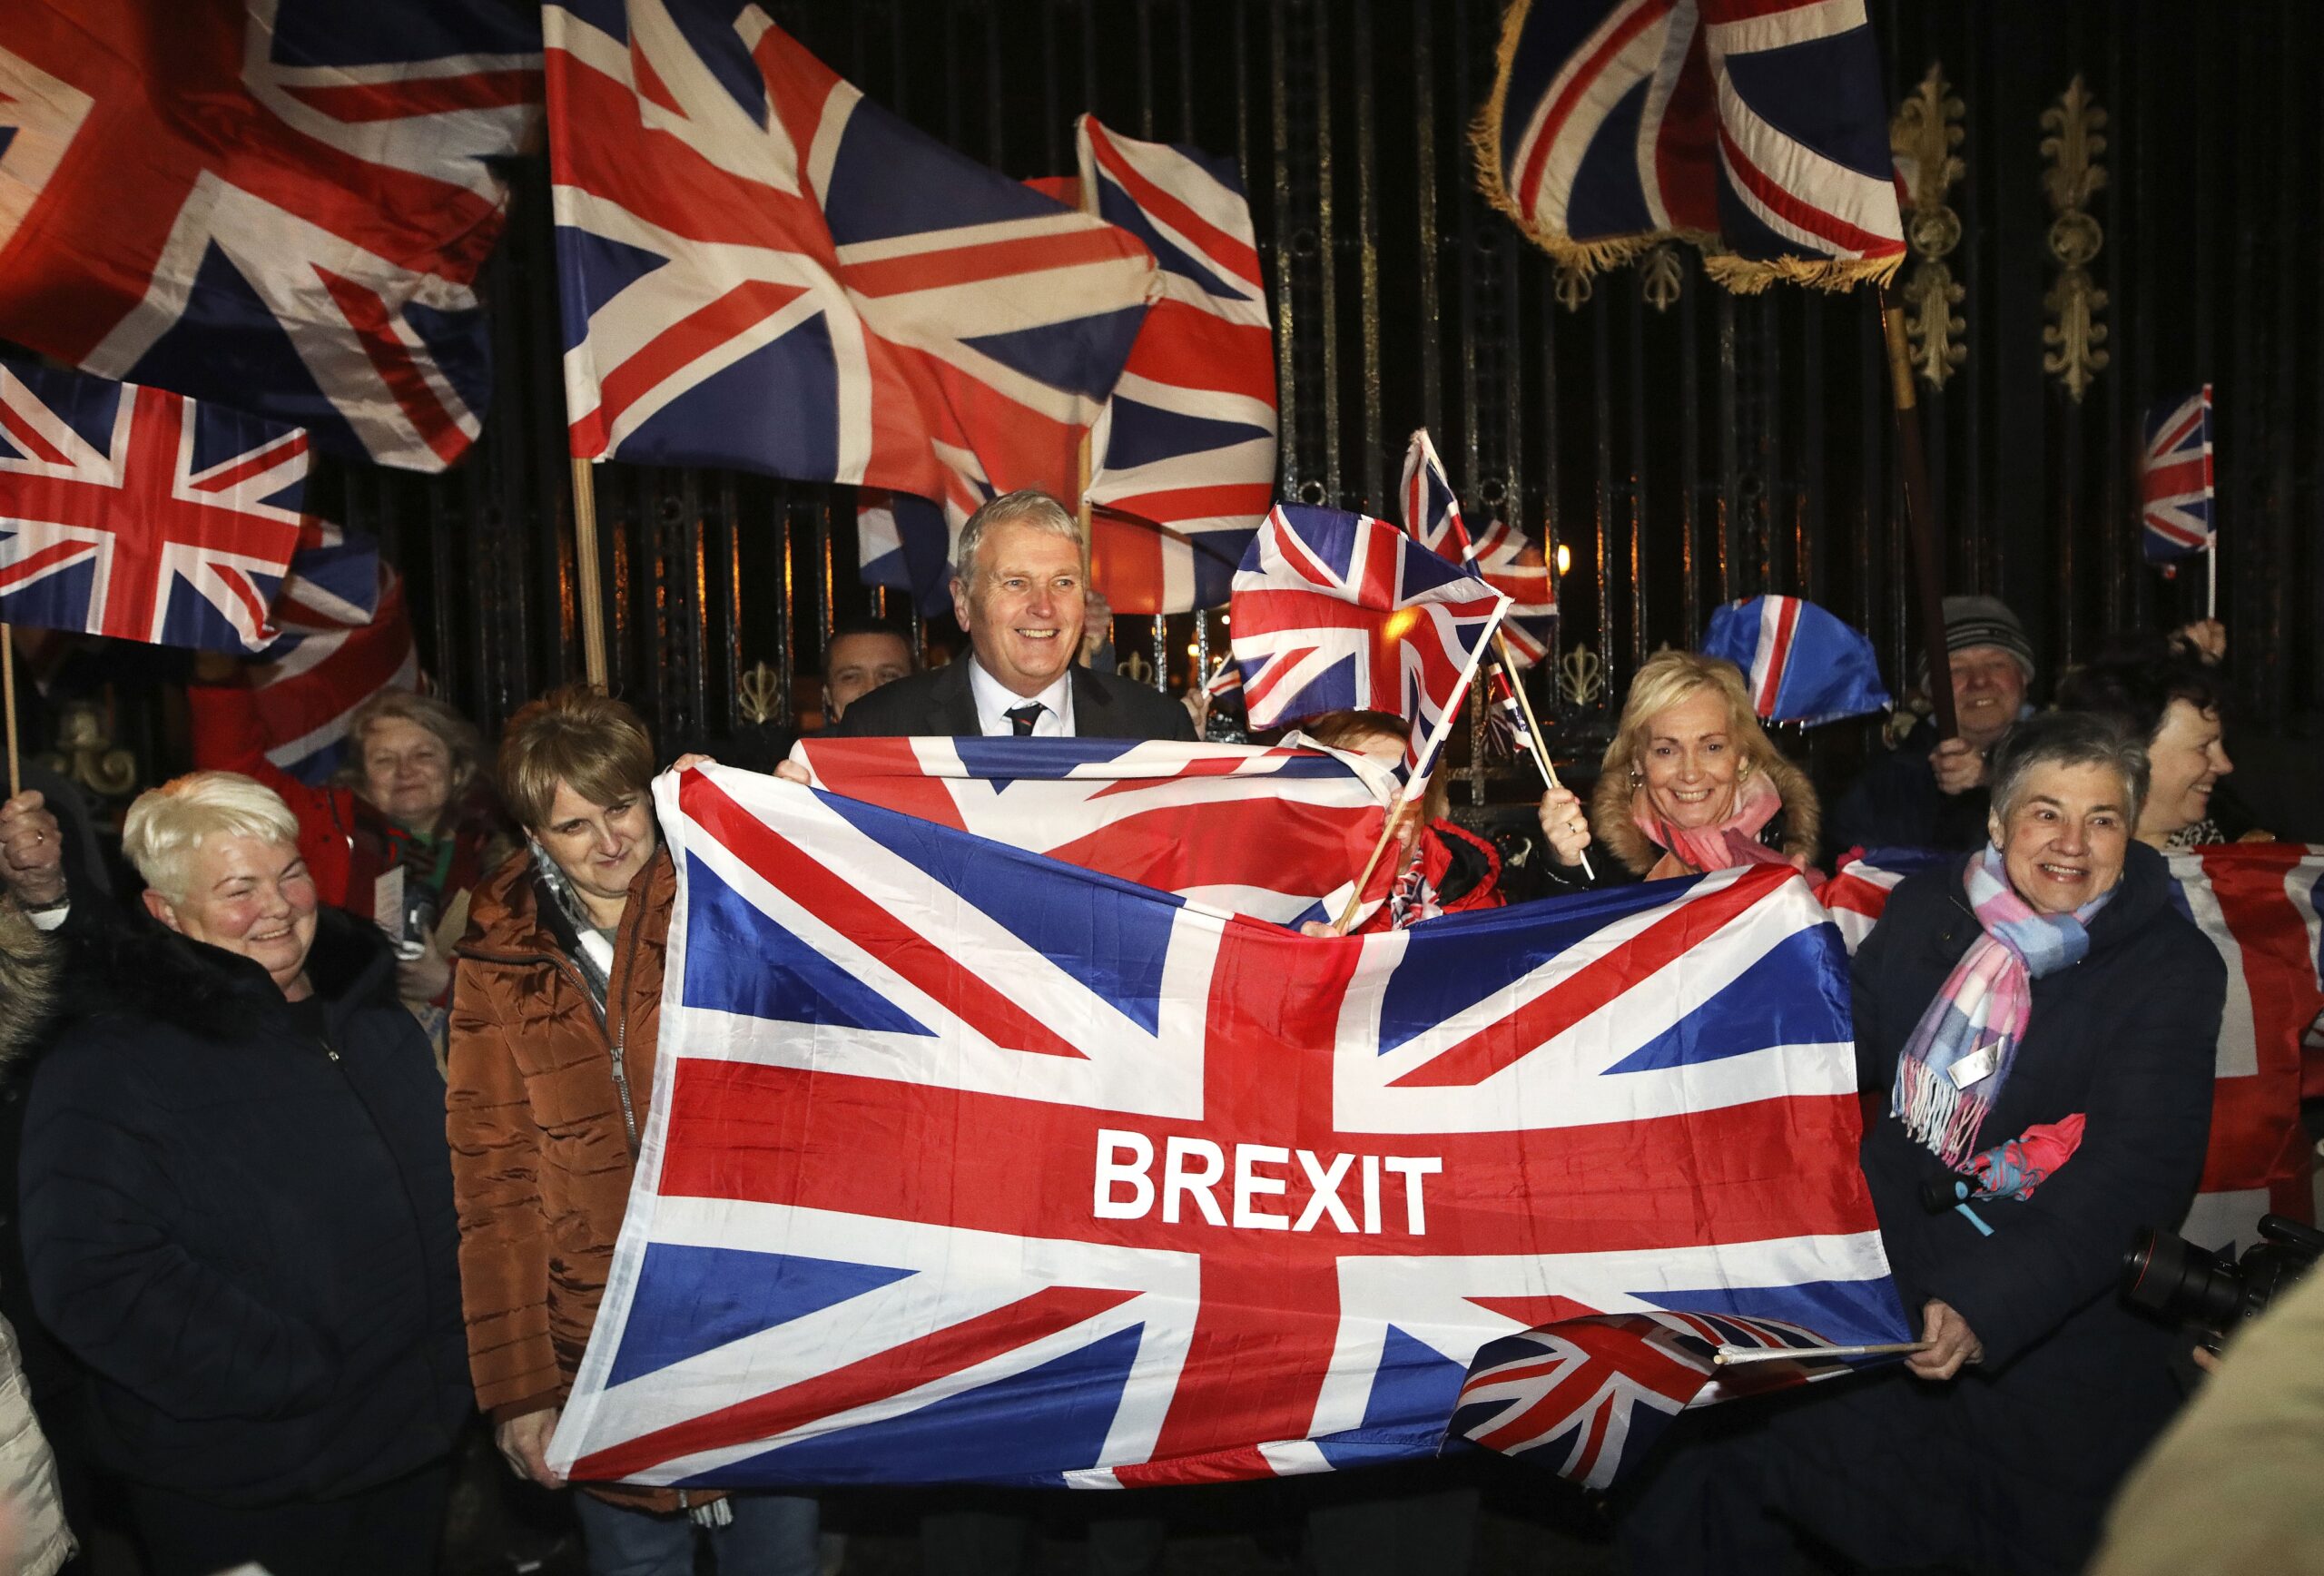 British citizens celebrating Brexit